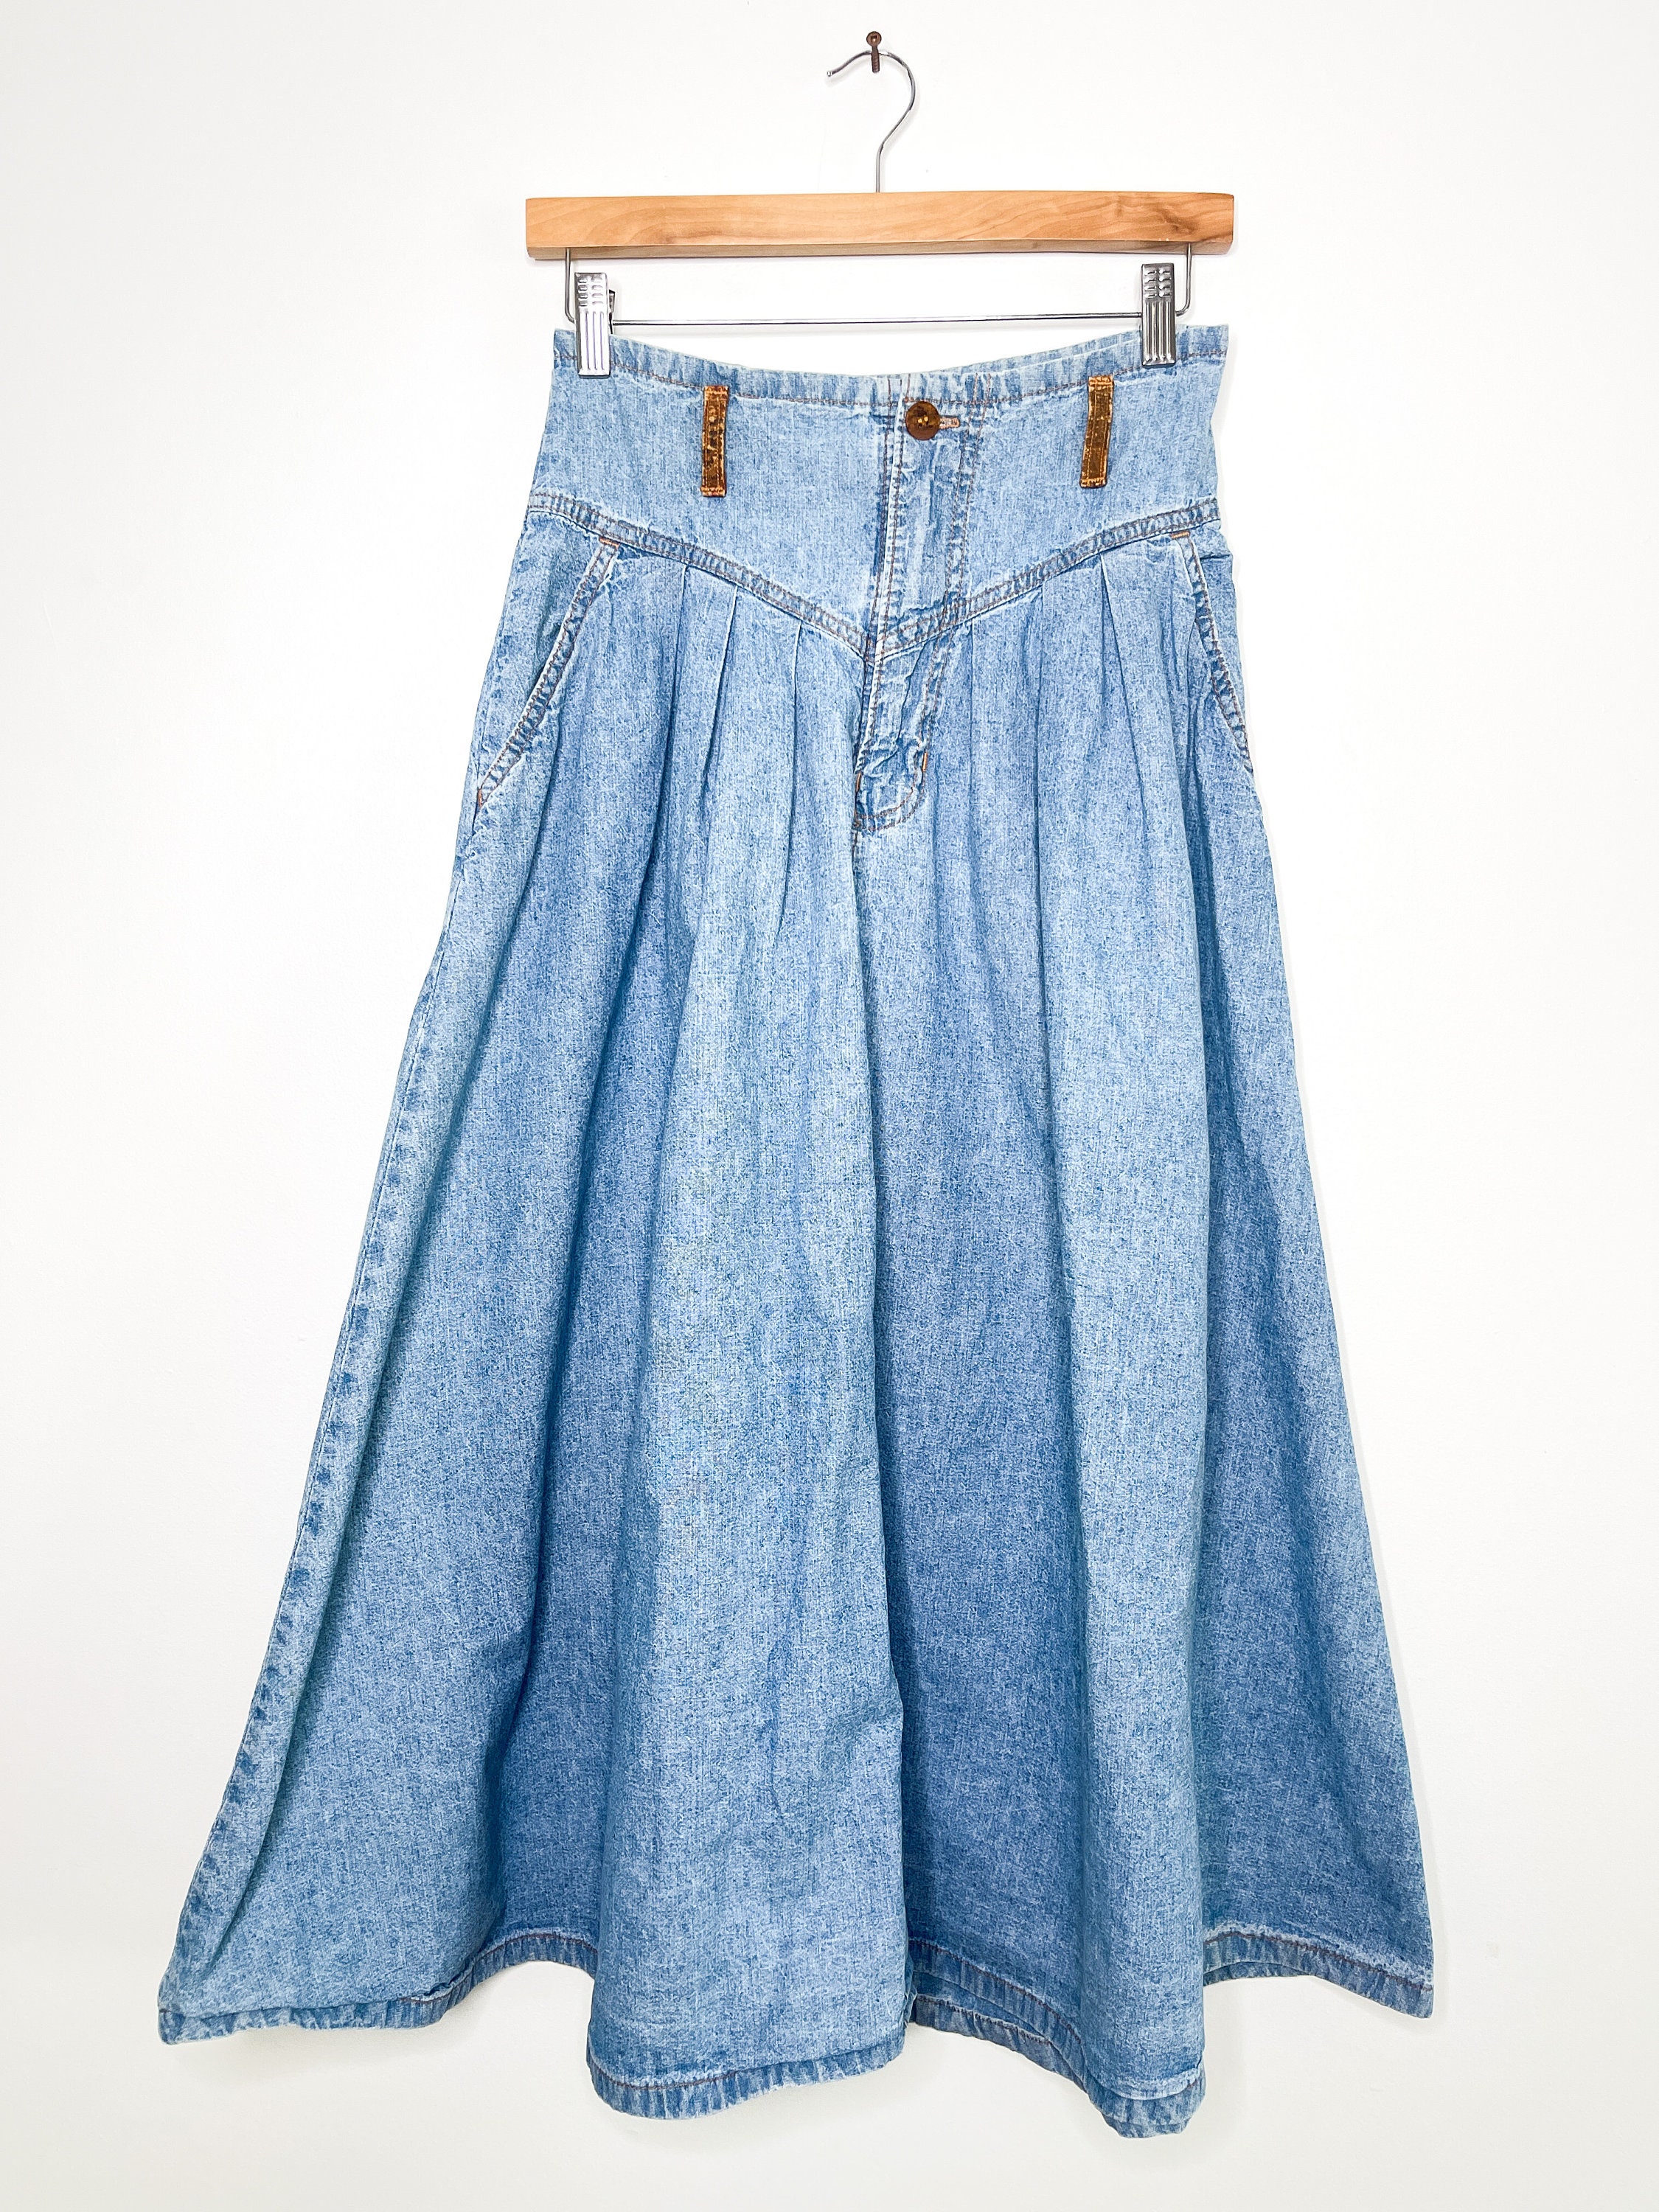 Vintage Hollywood Denim Skirt Vintage Denim Skirt Vintage Aline Denim ...